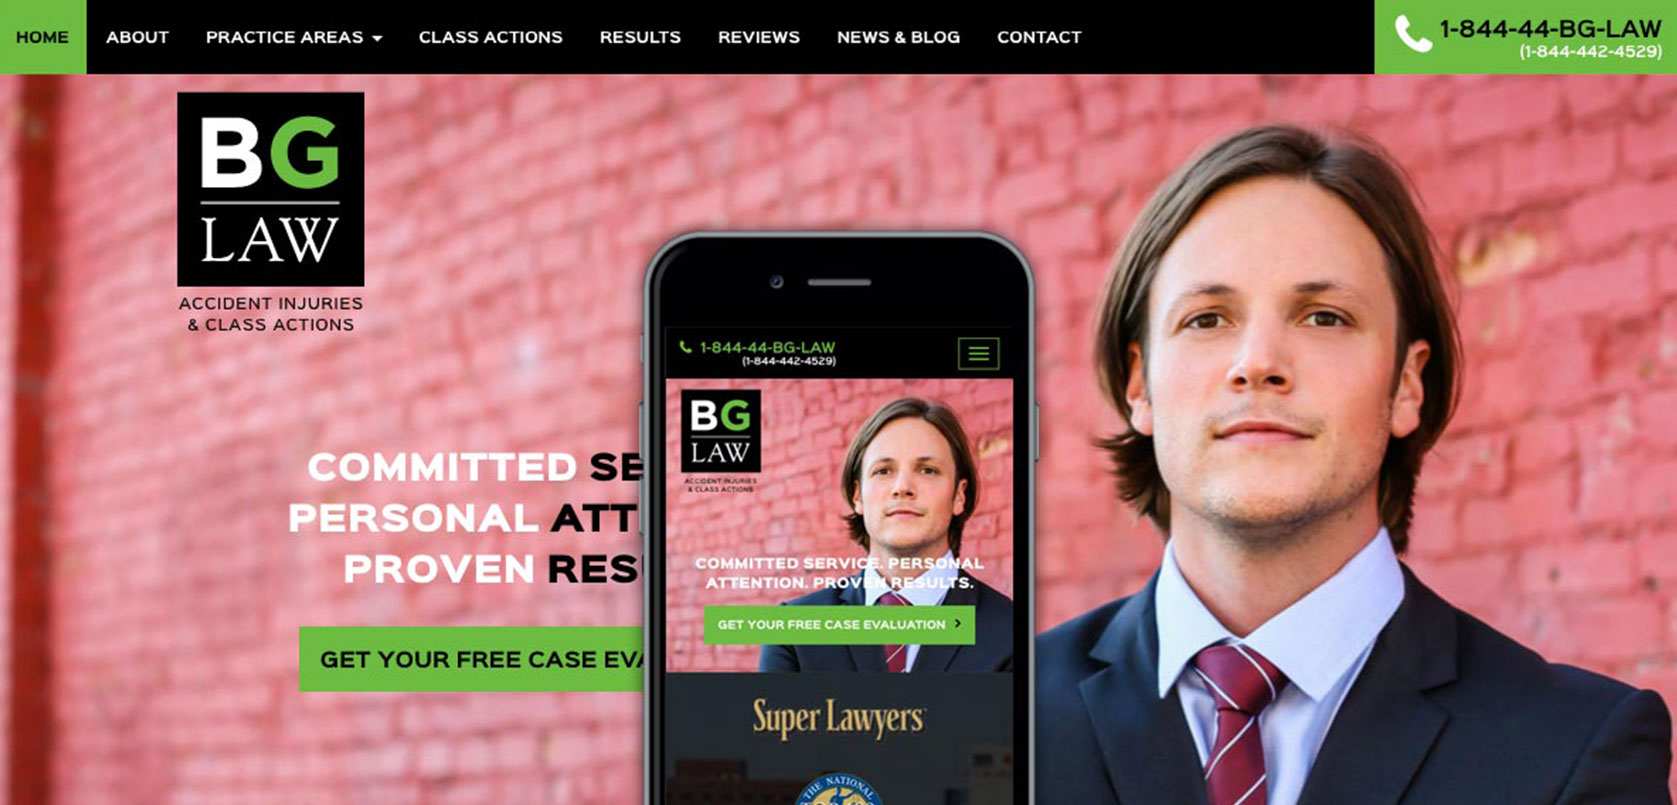 BG Law Website Design